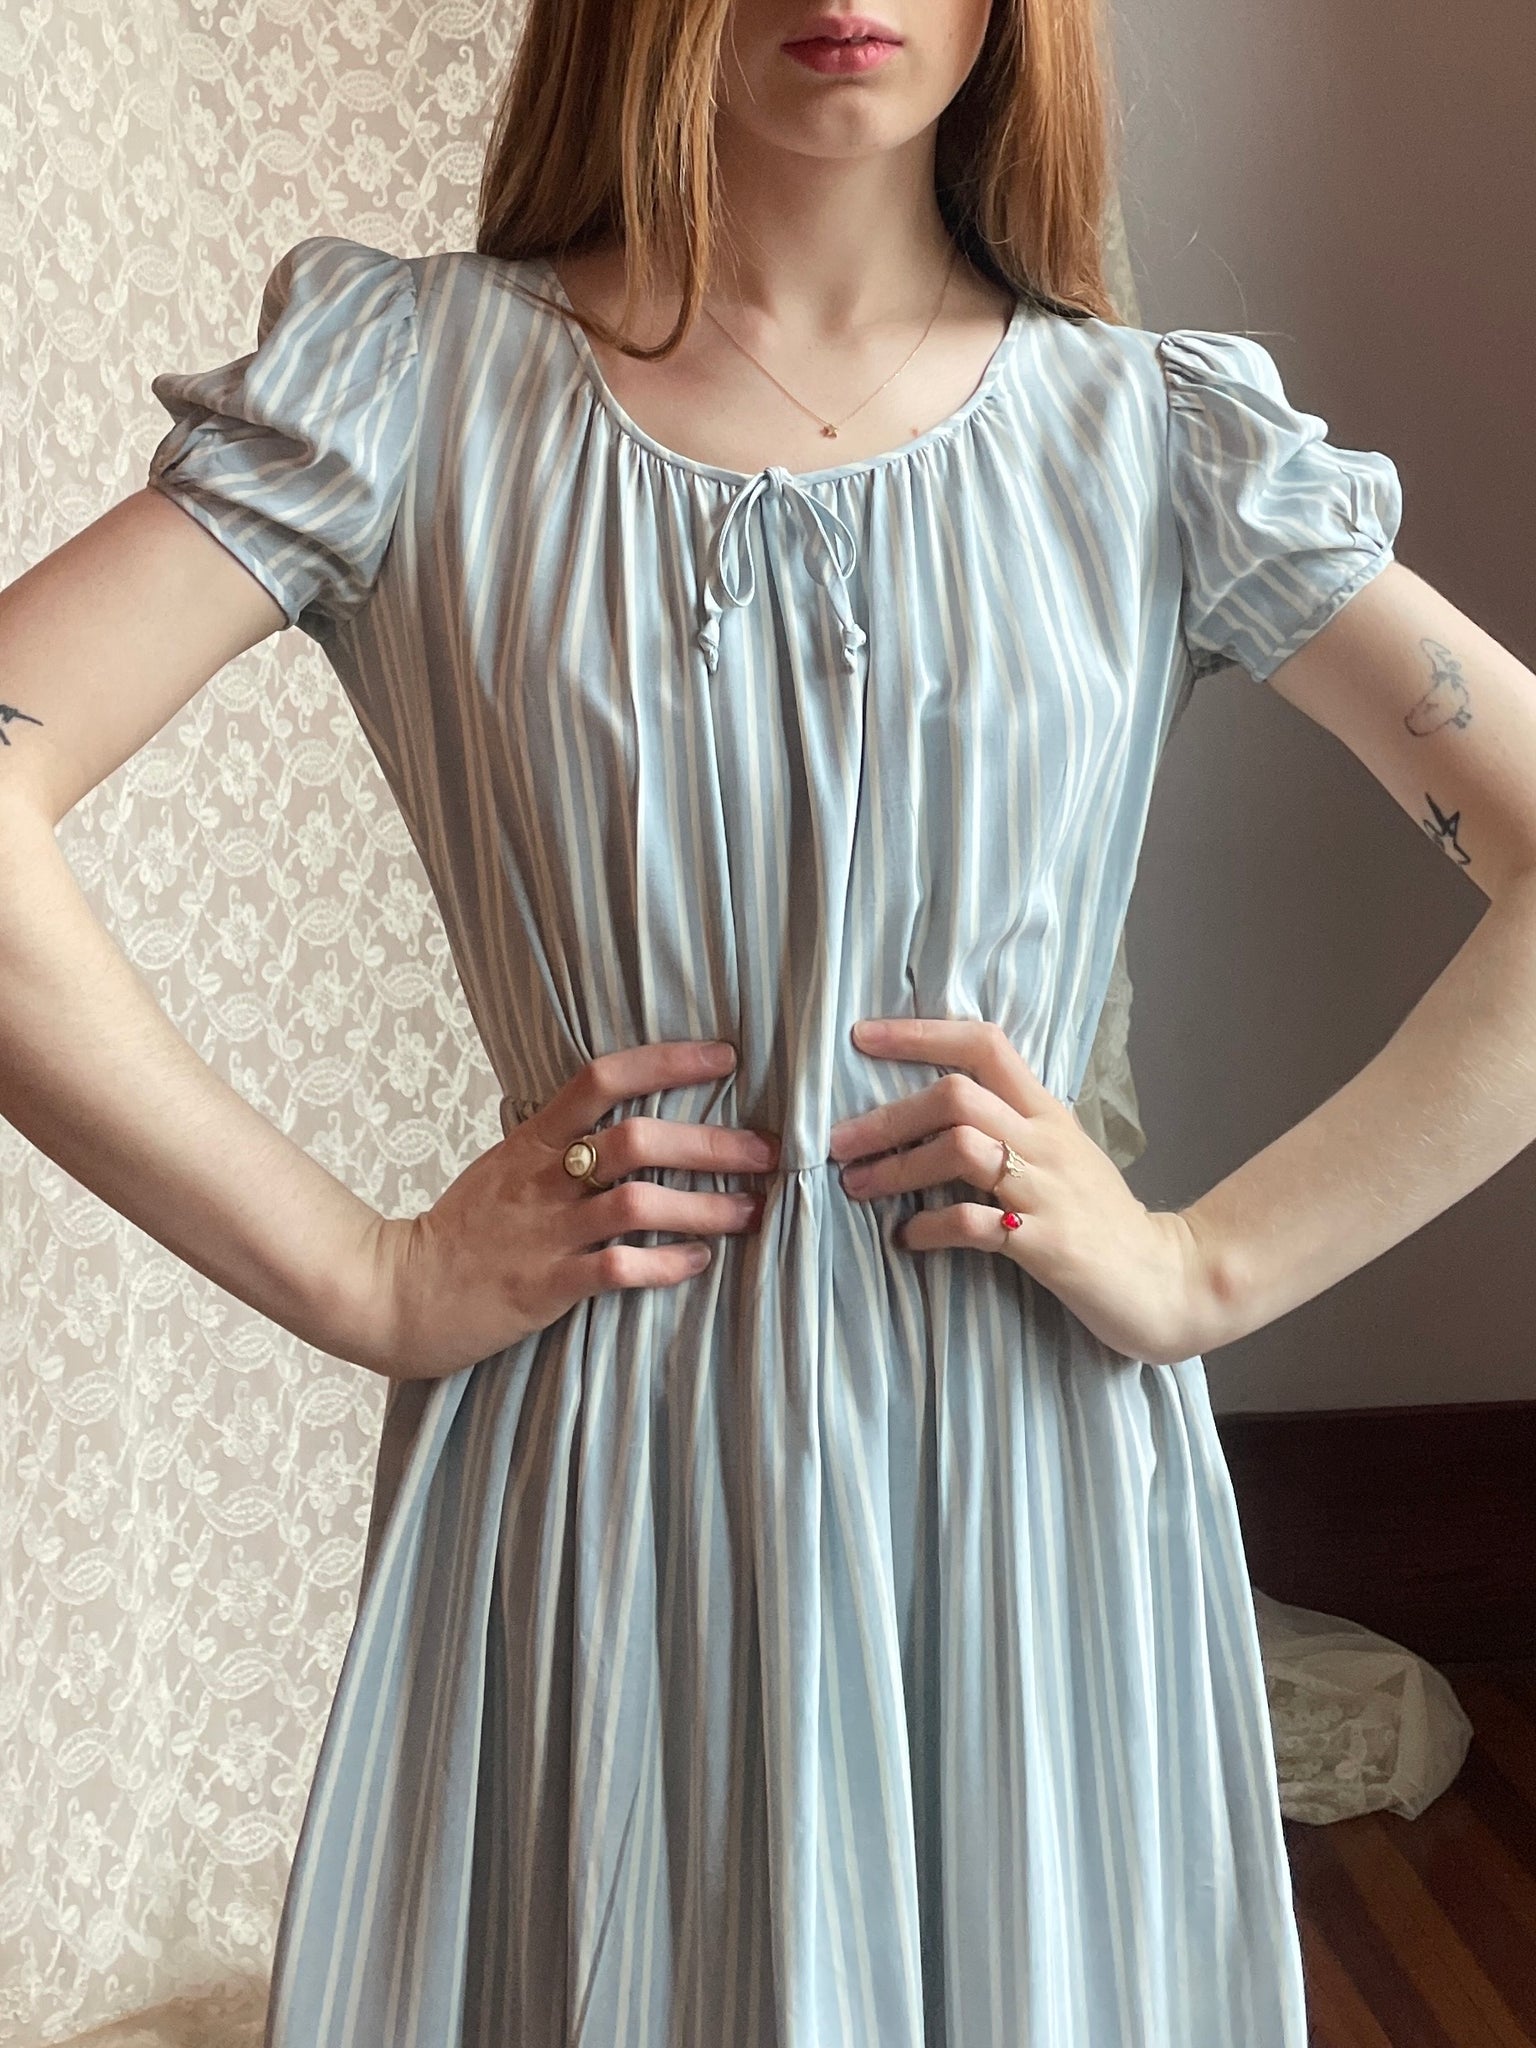 1940s Puff Sleeve Light Blue White Striped Dress